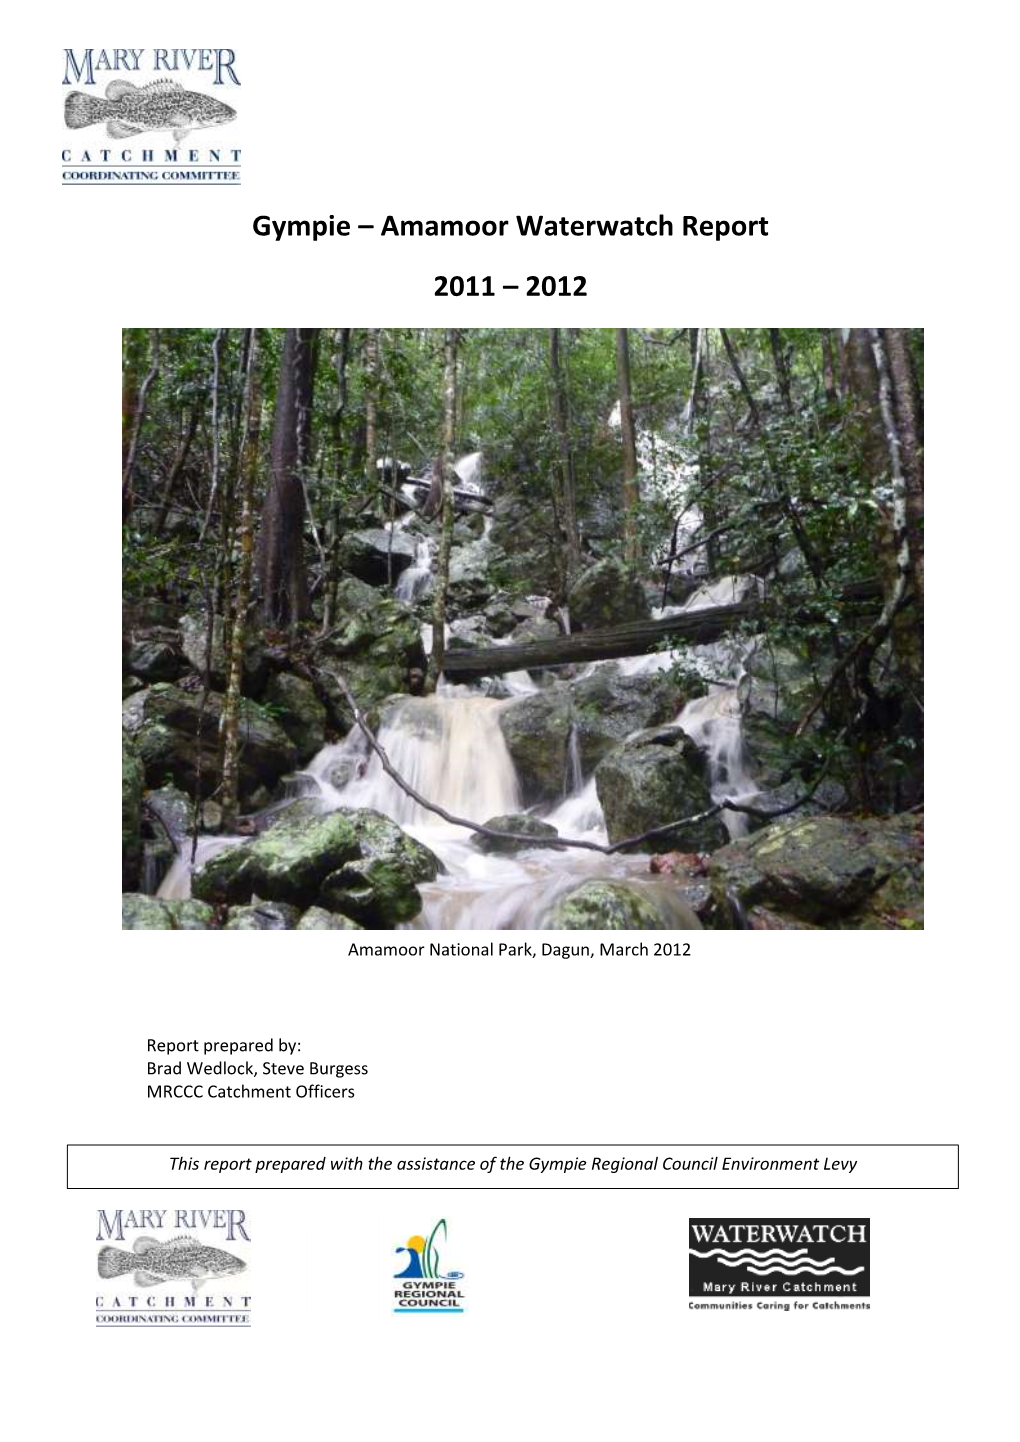 Gympie Amamoor Waterwatch Report 2012